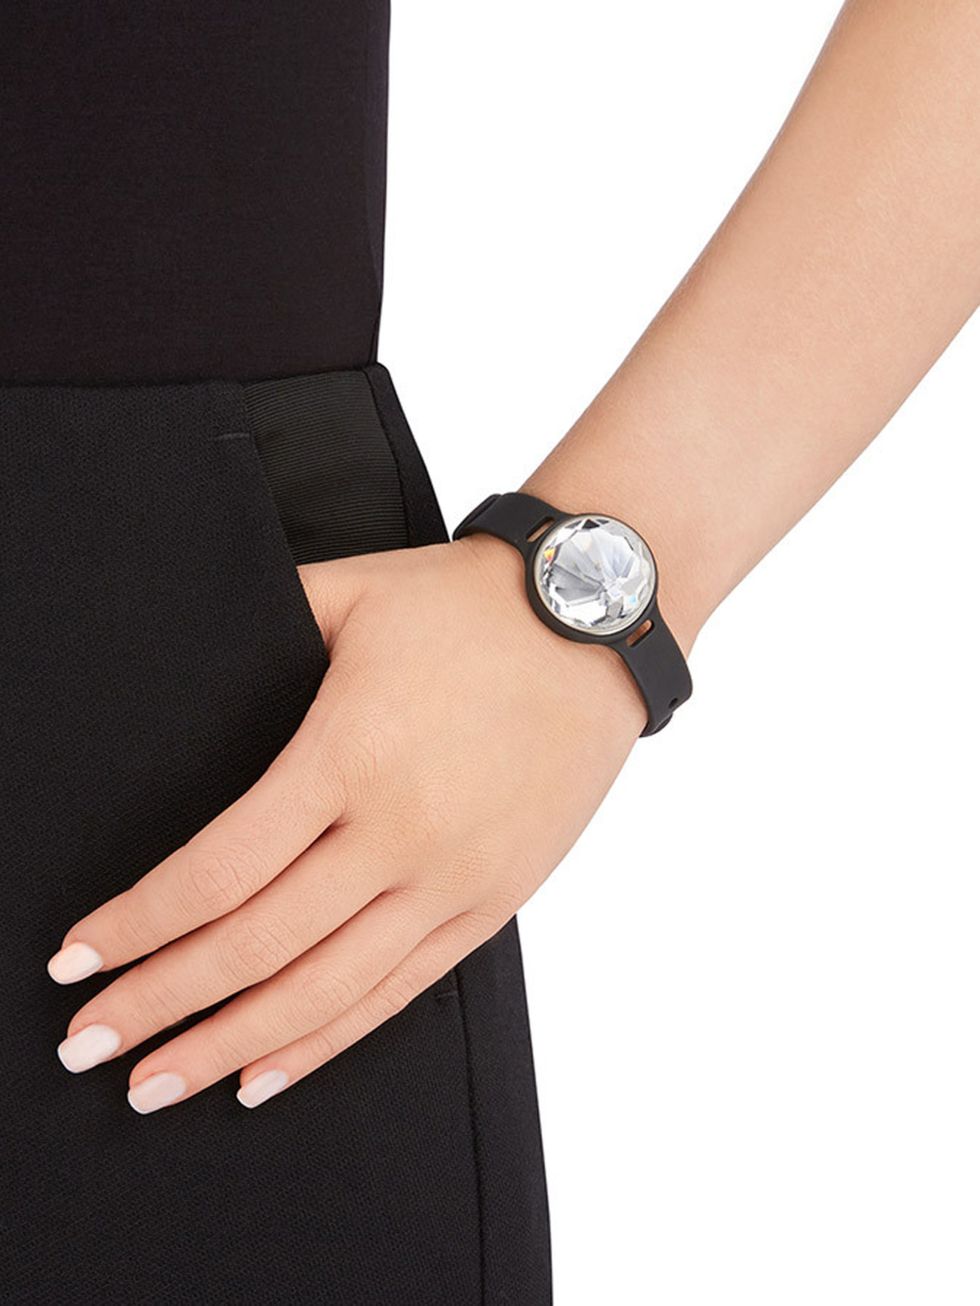 Finger, Product, Wrist, Watch, Hand, Analog watch, Fashion accessory, Fashion, Black, Watch accessory, 